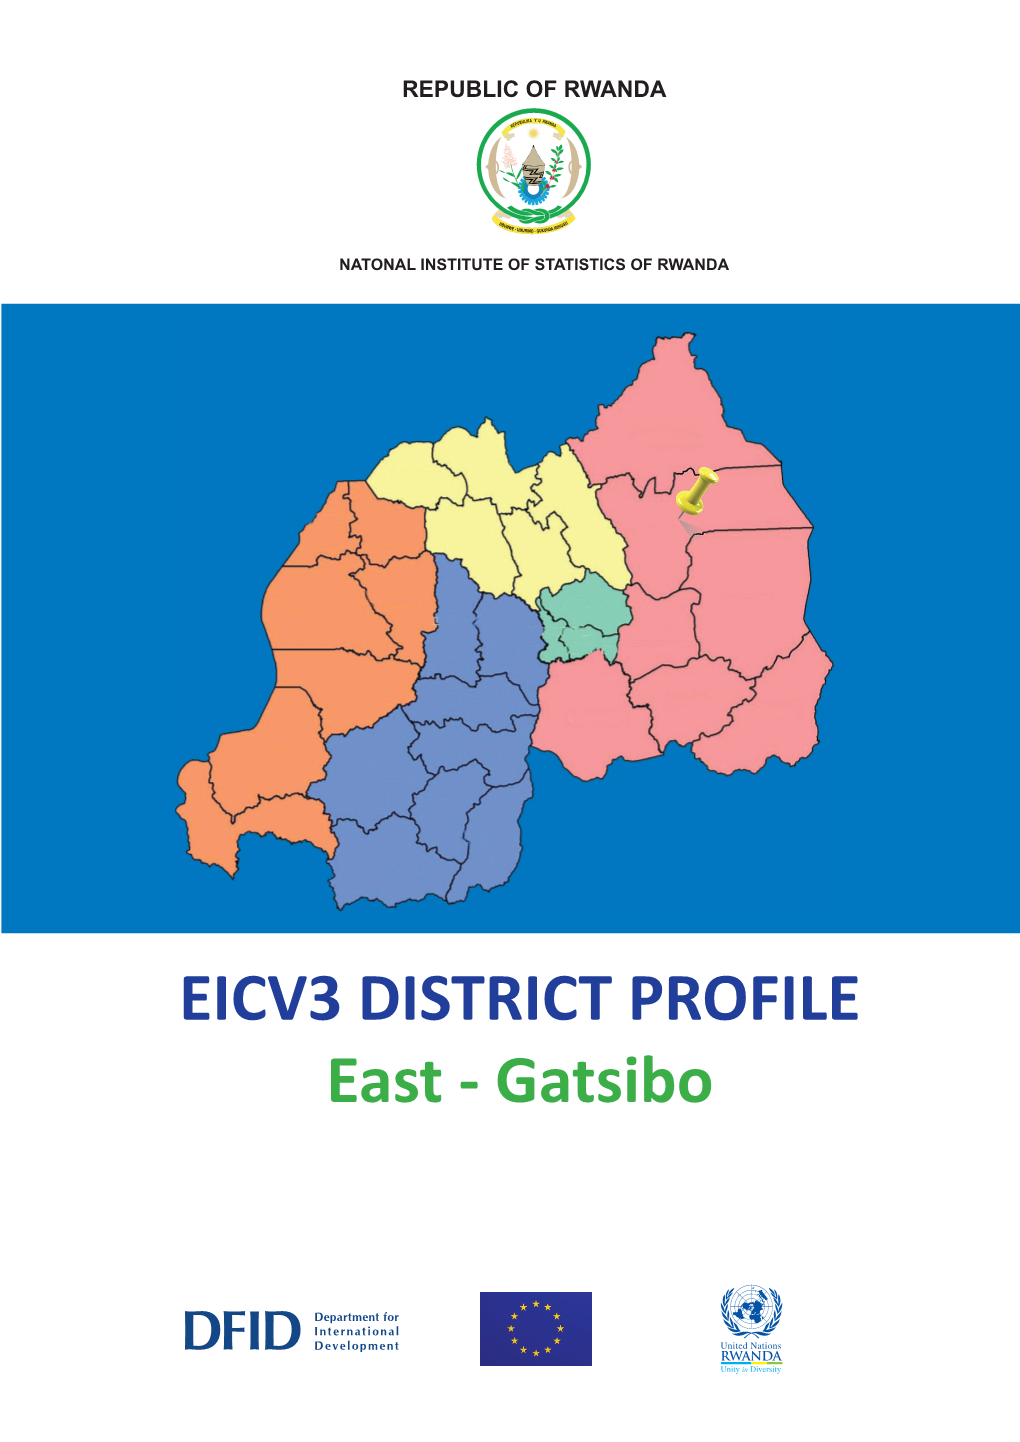 EICV3 DISTRICT PROFILE East - Gatsibo